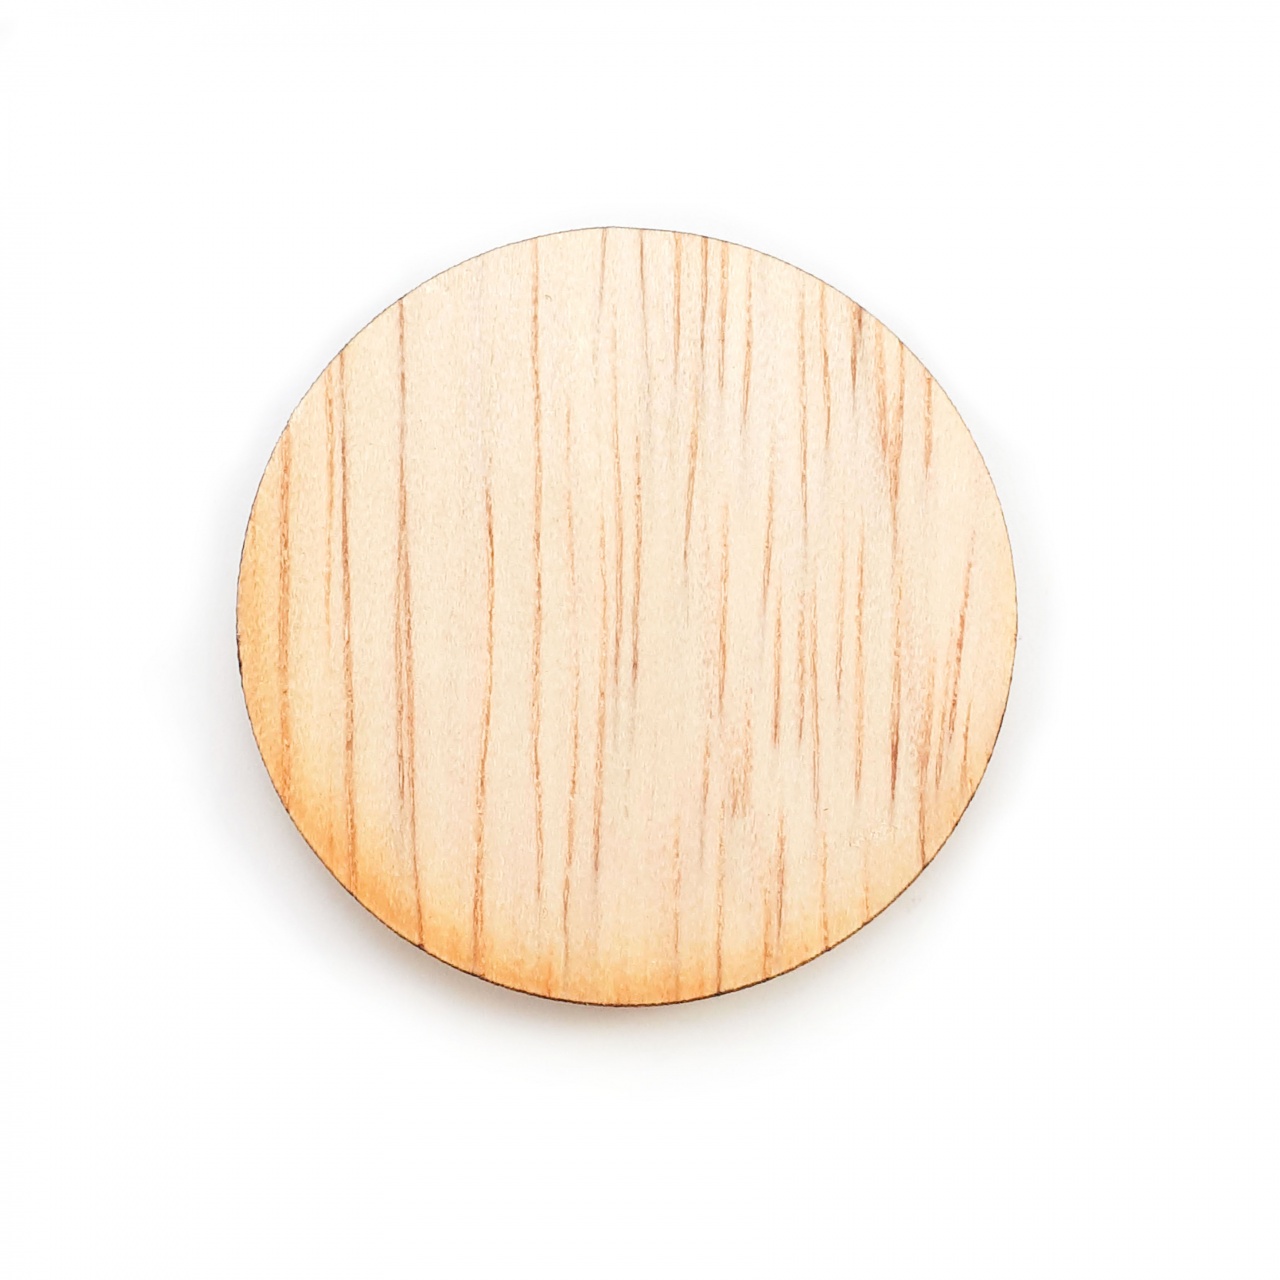 Bază rotundă 5 cm, placaj lemn :: Ø5 cm